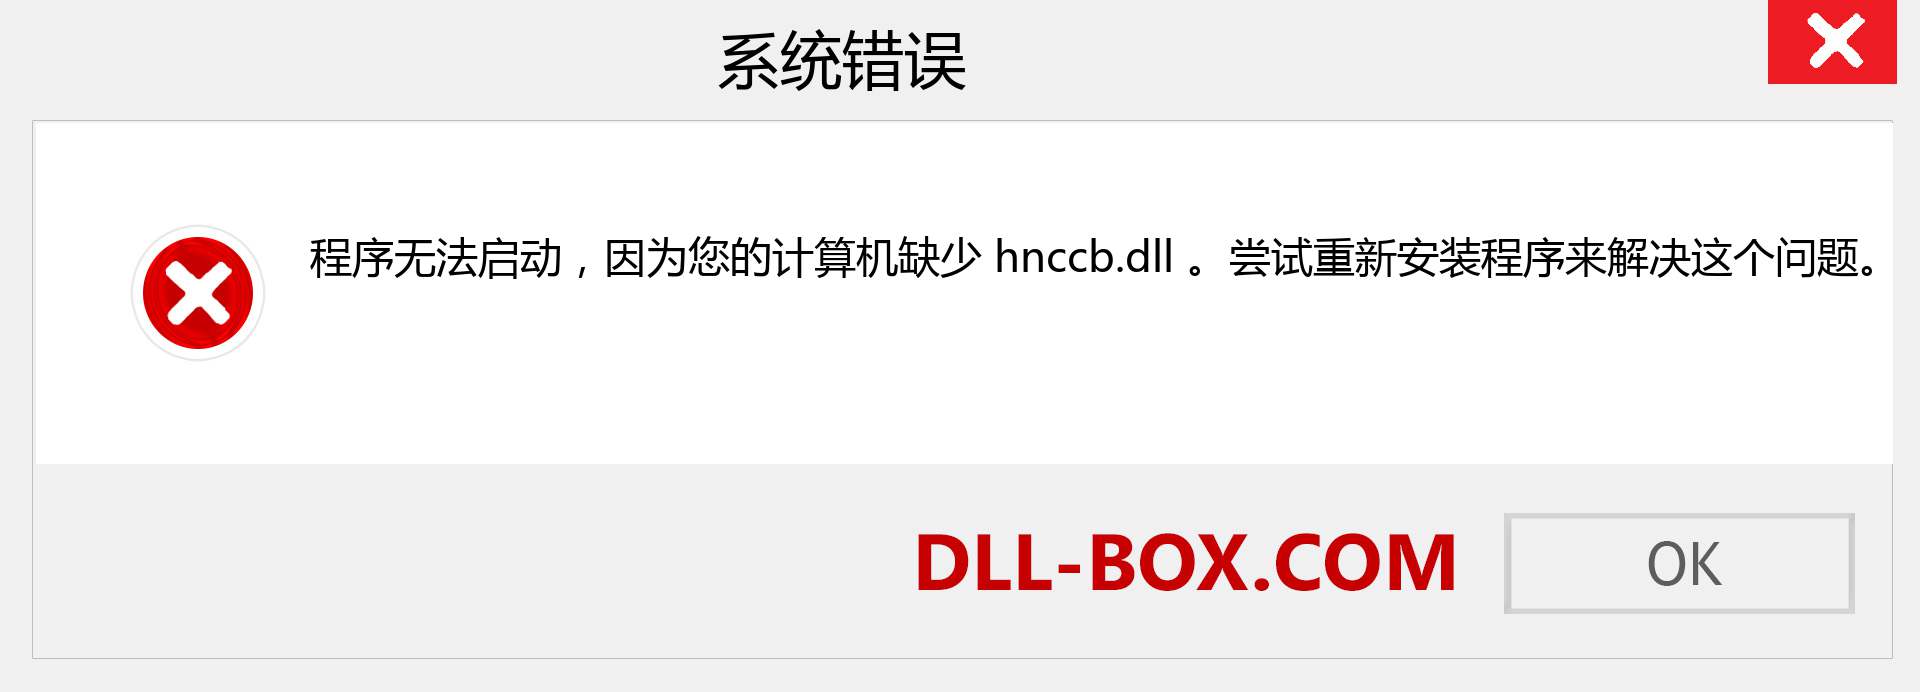 hnccb.dll 文件丢失？。 适用于 Windows 7、8、10 的下载 - 修复 Windows、照片、图像上的 hnccb dll 丢失错误